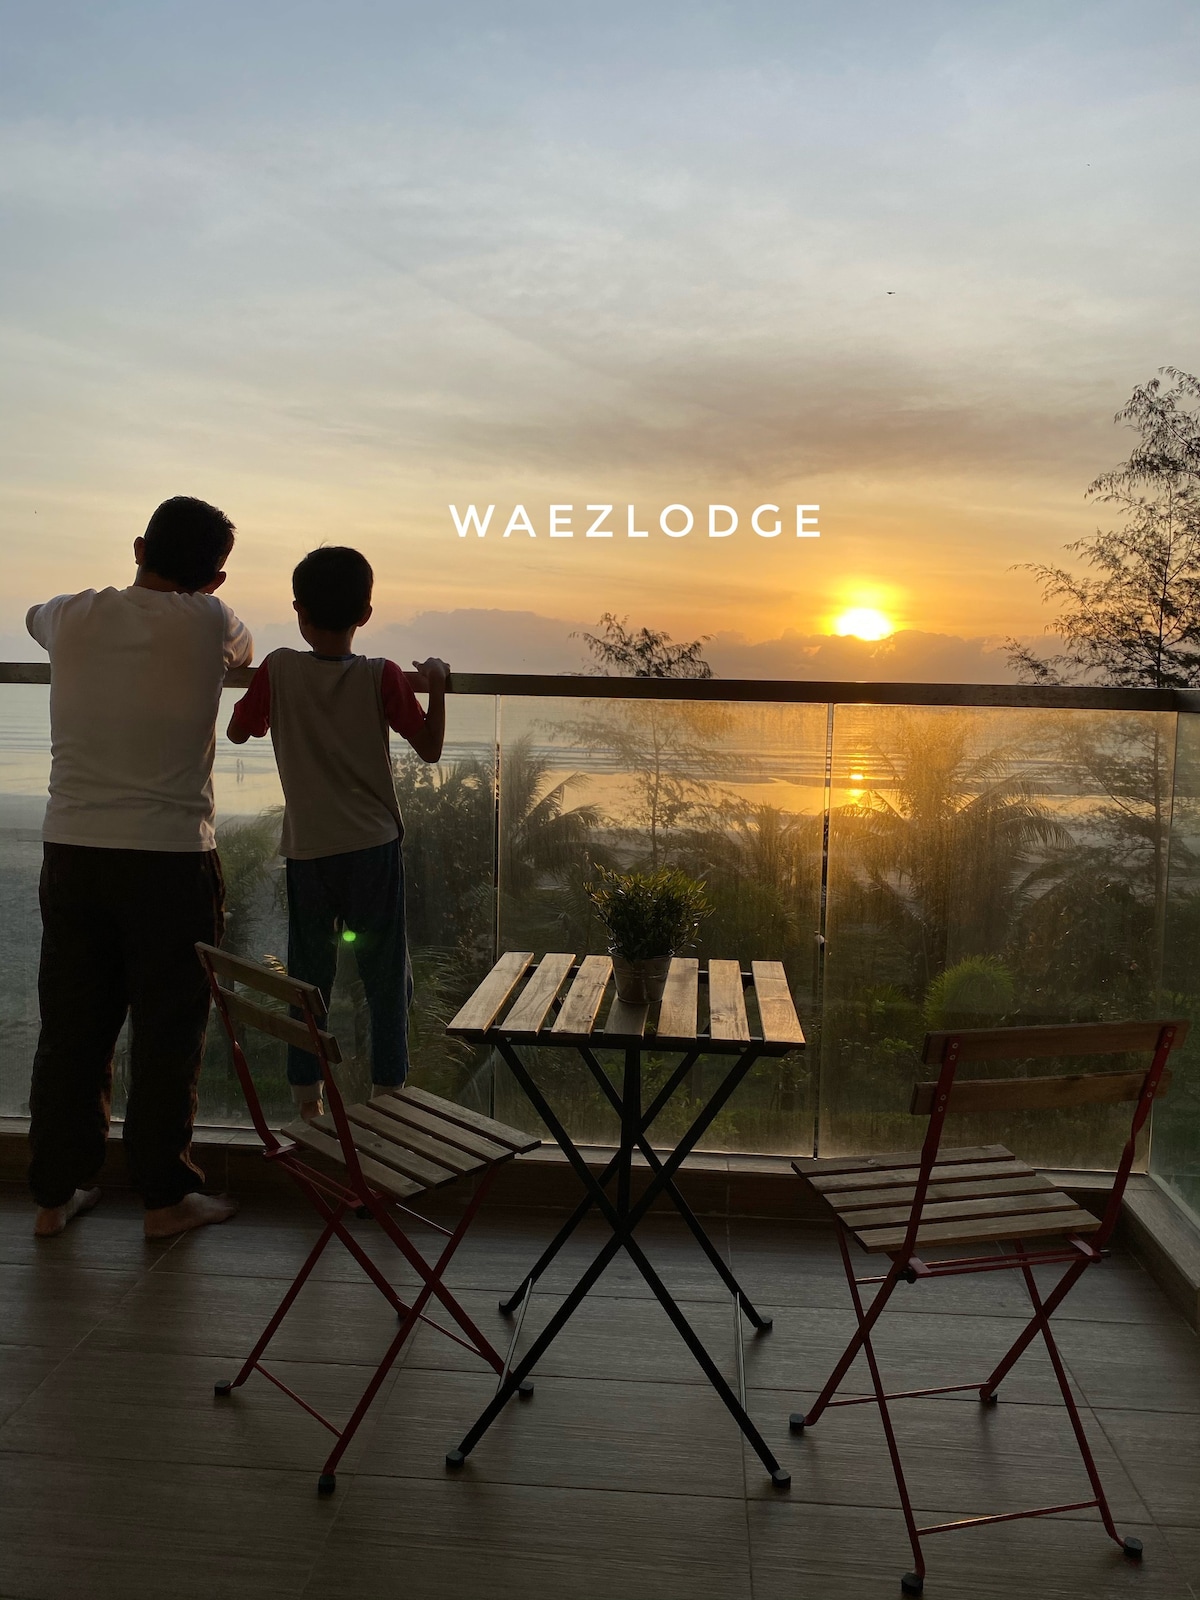 Waez Lodge @ TimurBay ，欣赏风景如画的日出景观